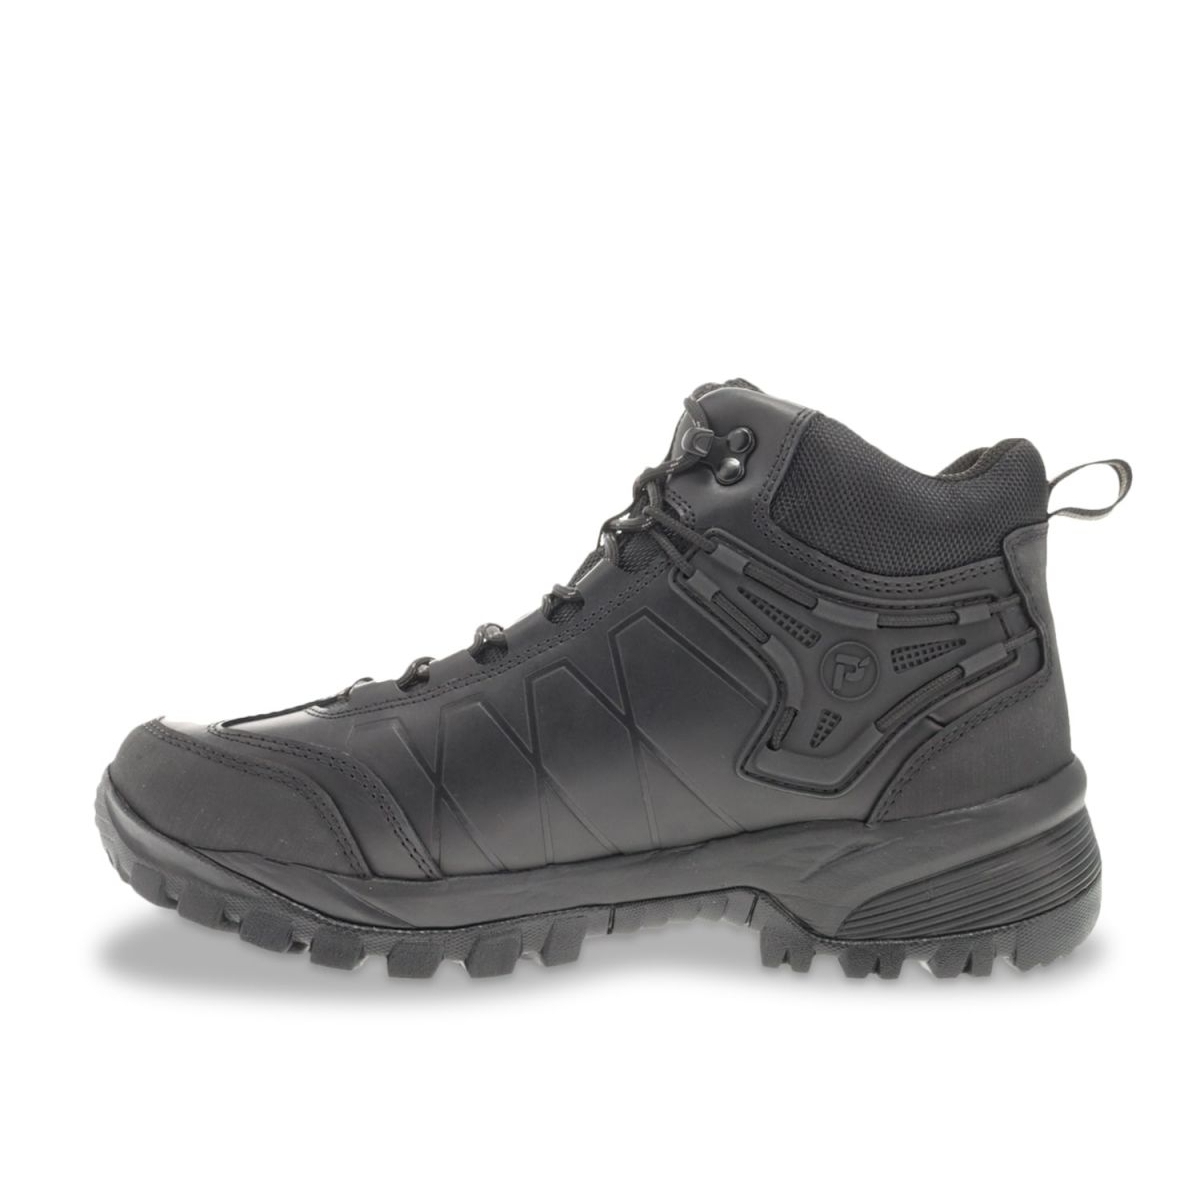 Propet Men's Ridge Walker Force Hiking Boots Black - MBA052LBLK BLACK - BLACK, 10